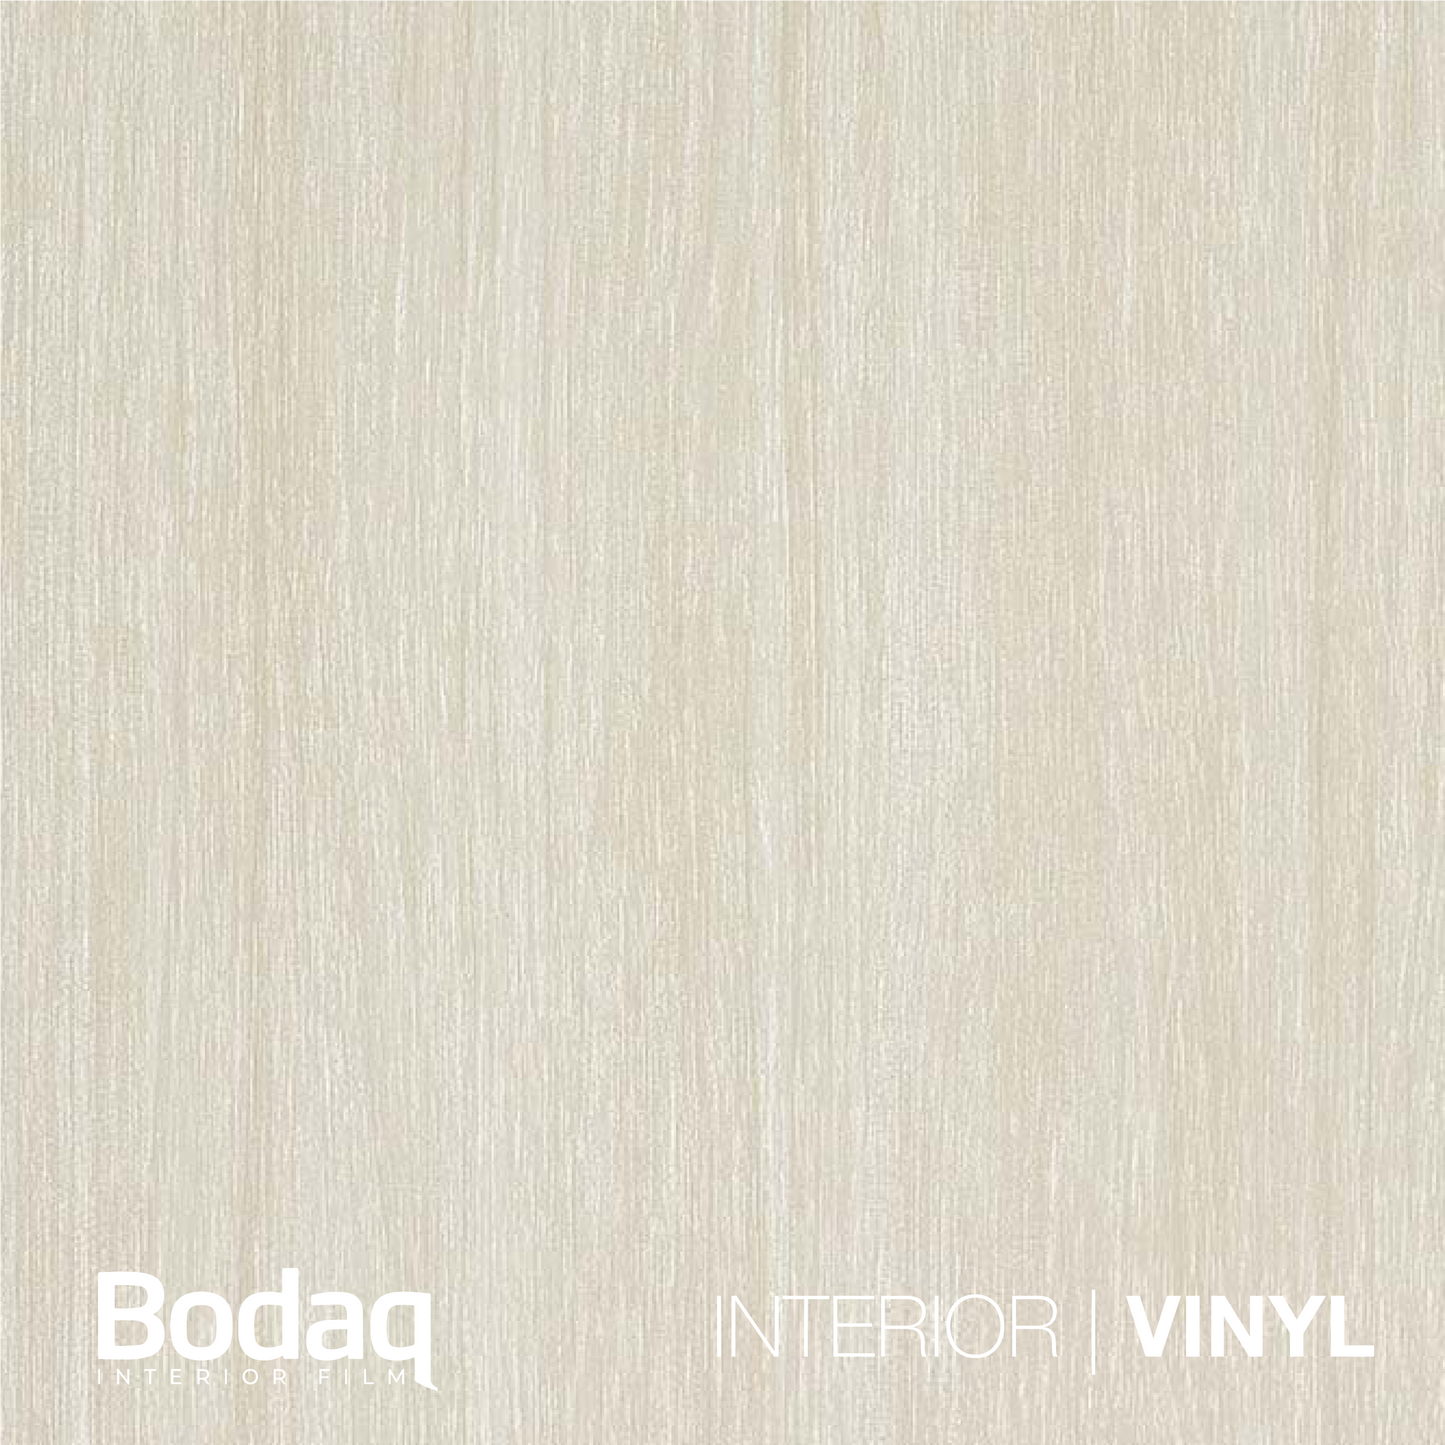 BODAQ Interior Film XP115 Premium Wood - A5 Sample